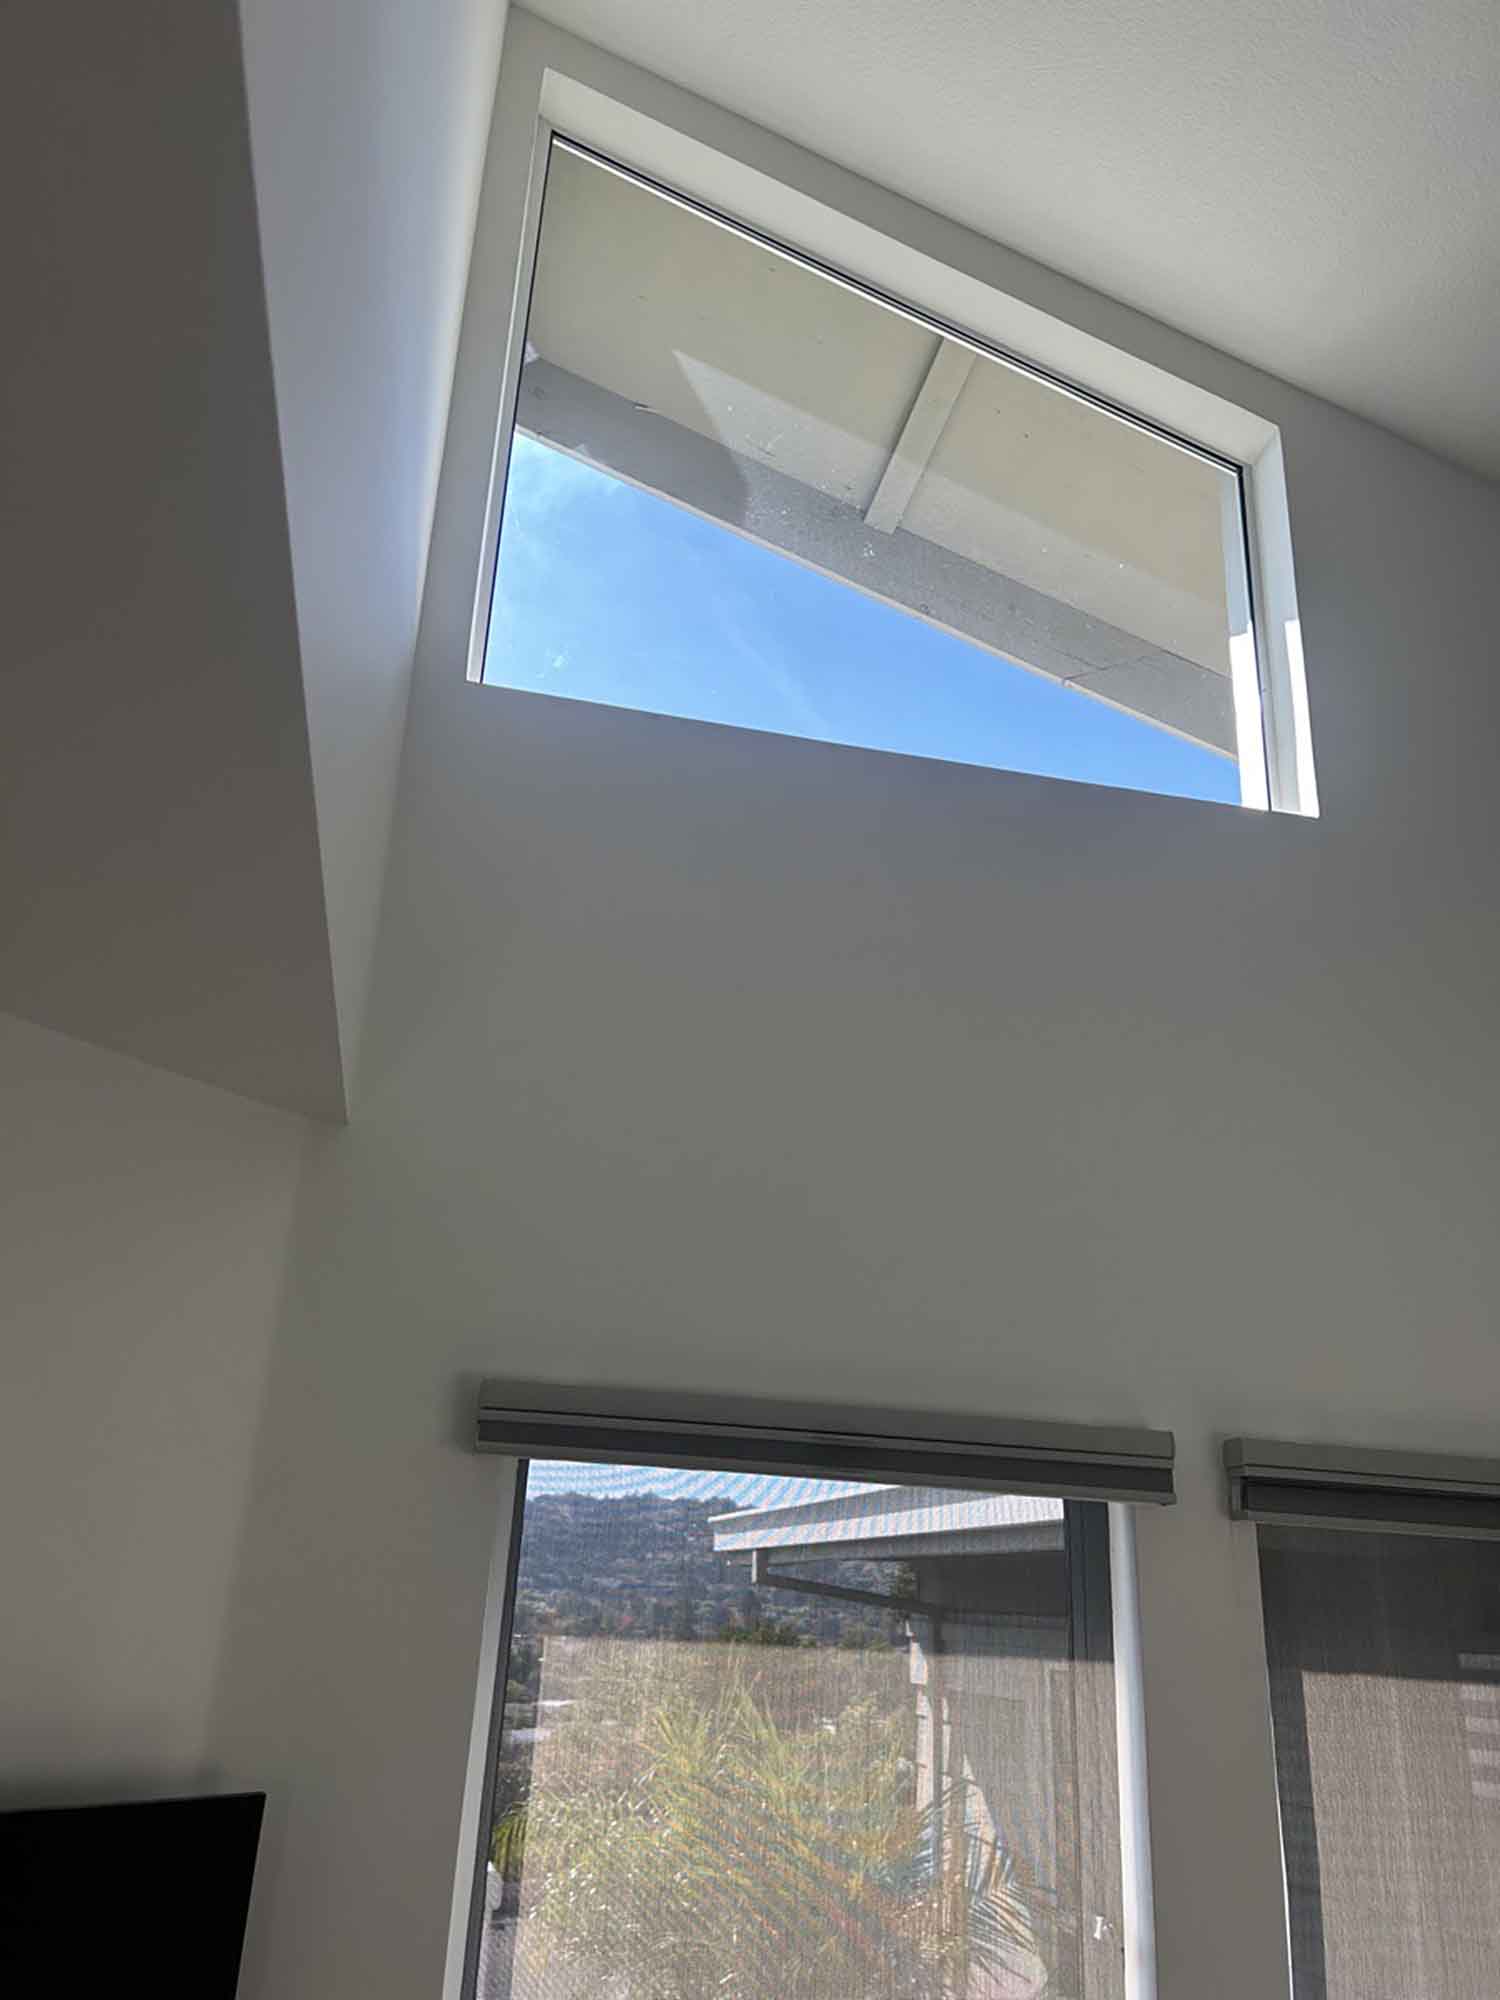 3M Sun Control Window Film For San Rafael Homes by ClimatePro